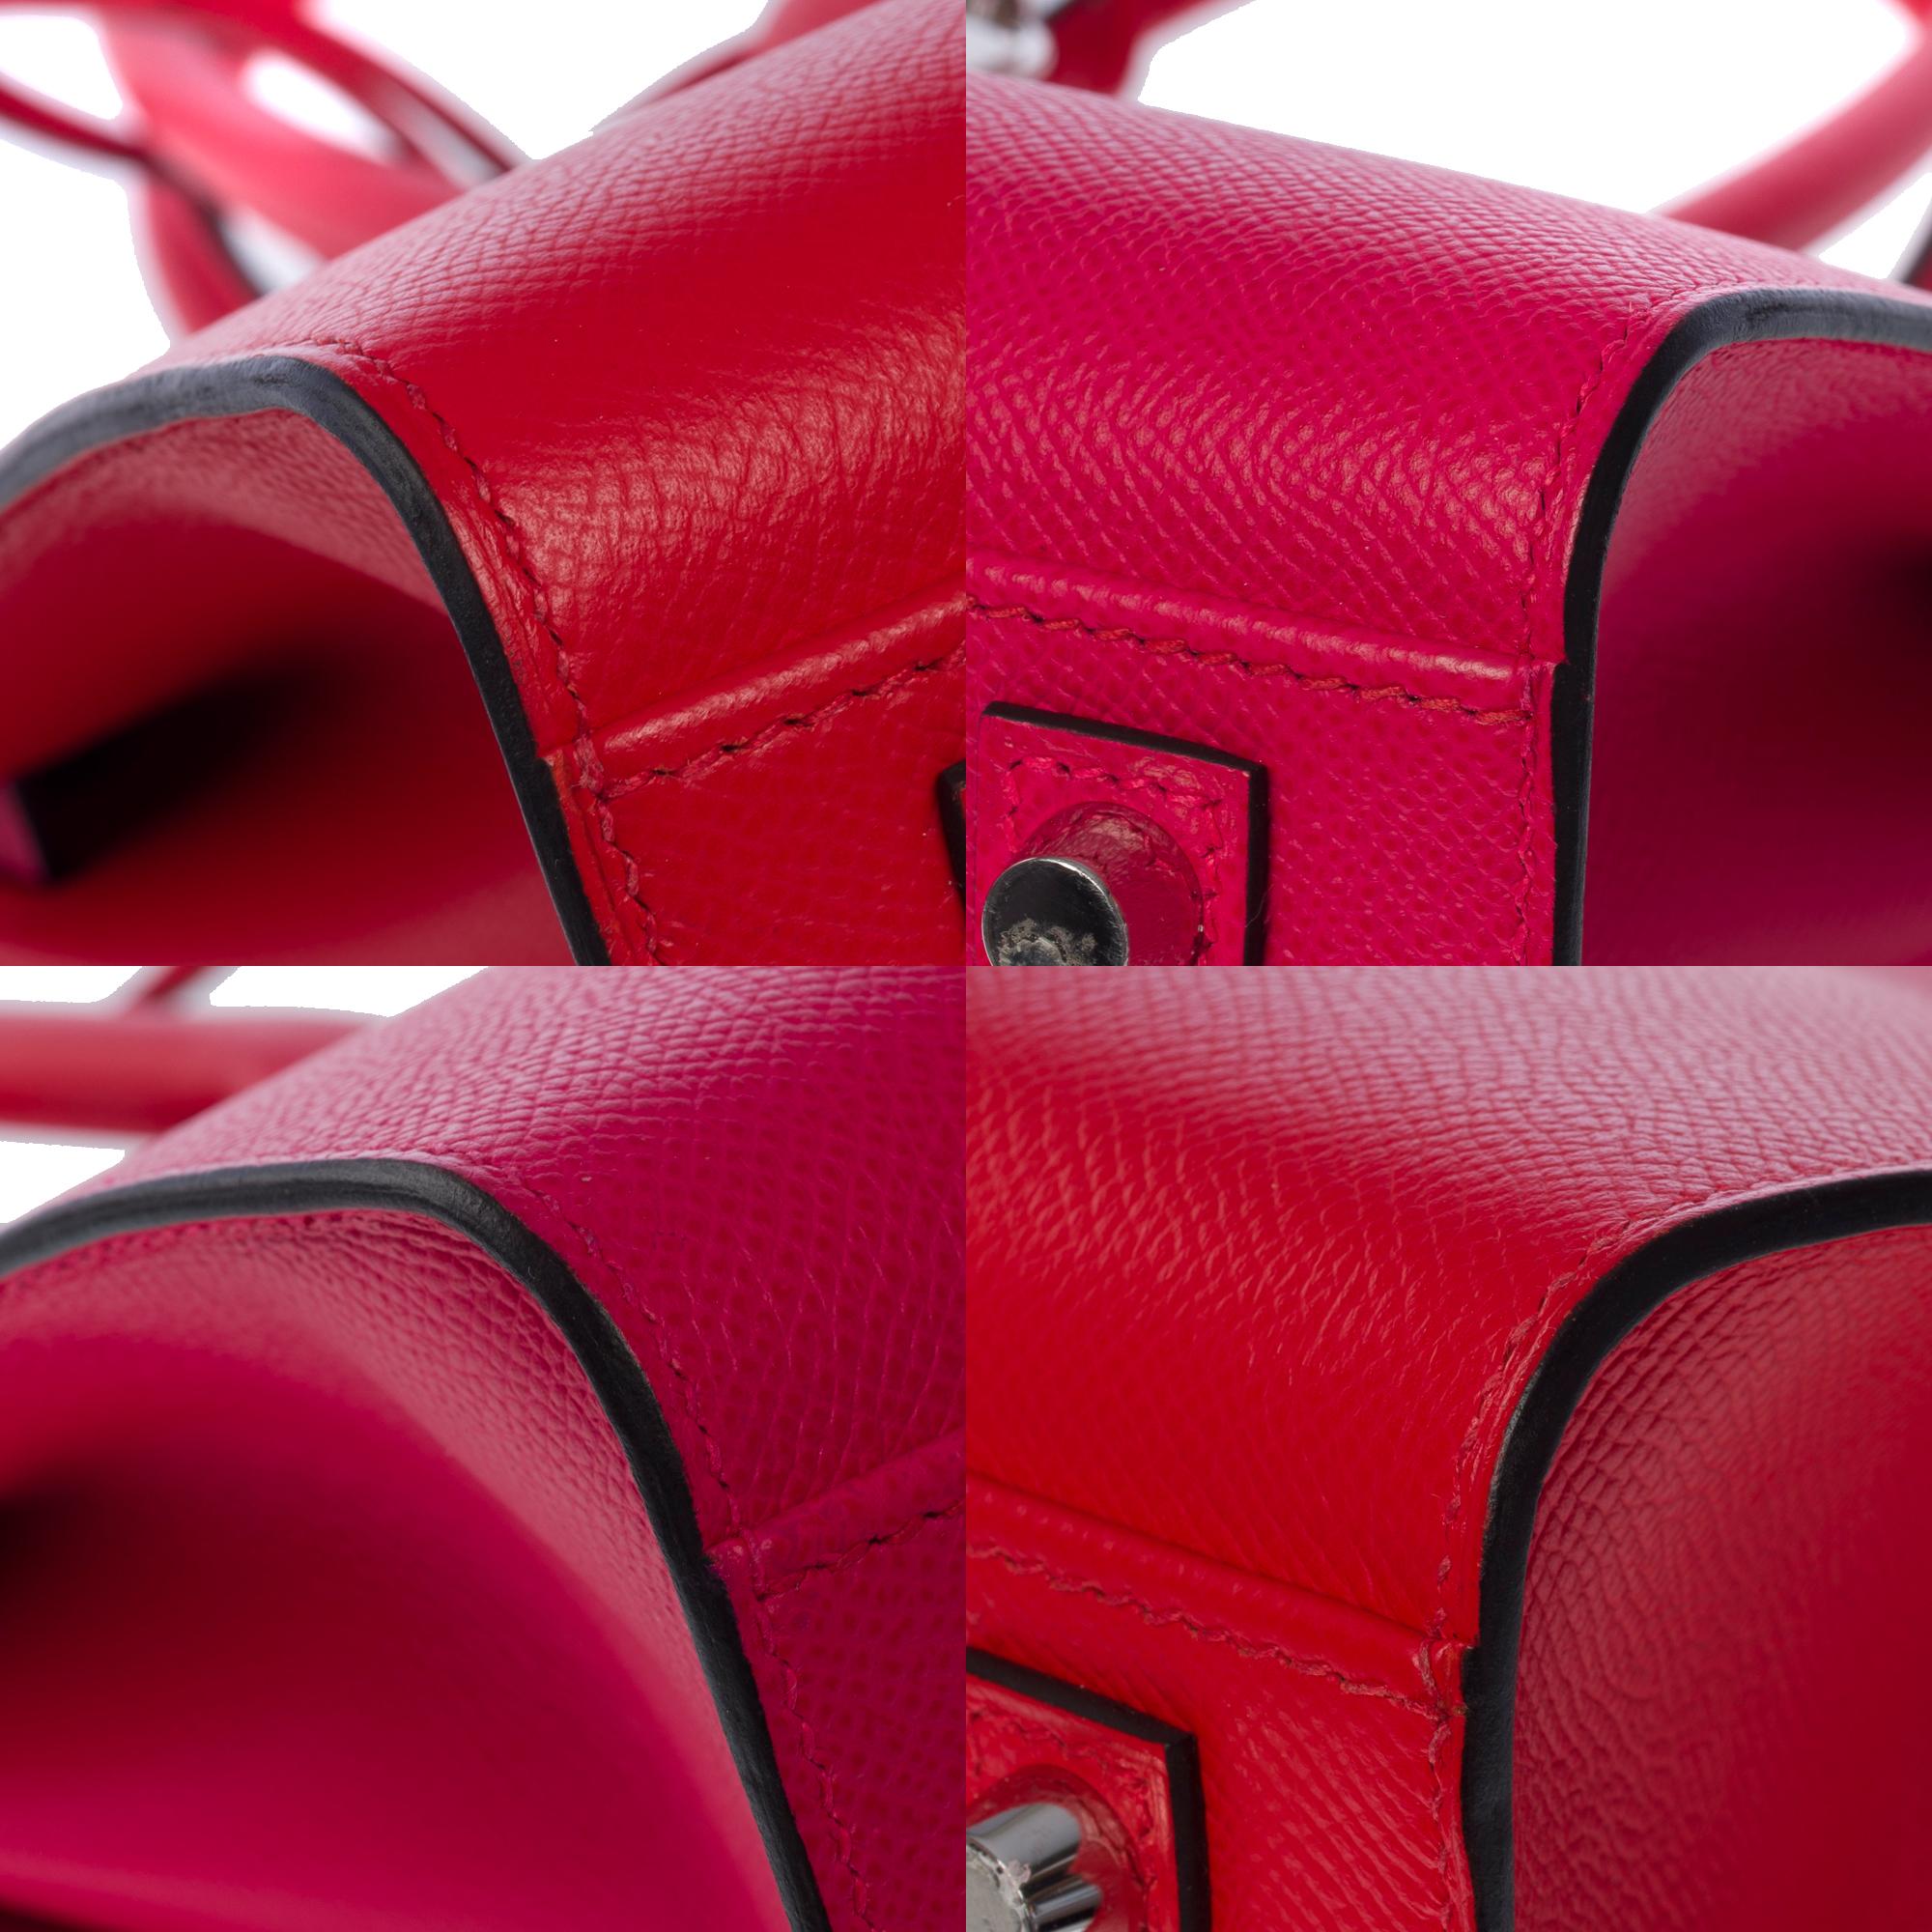 New Hermès Kazak limited edition Birkin 30 handbag in Red/Pink Epsom leather, SHW 7